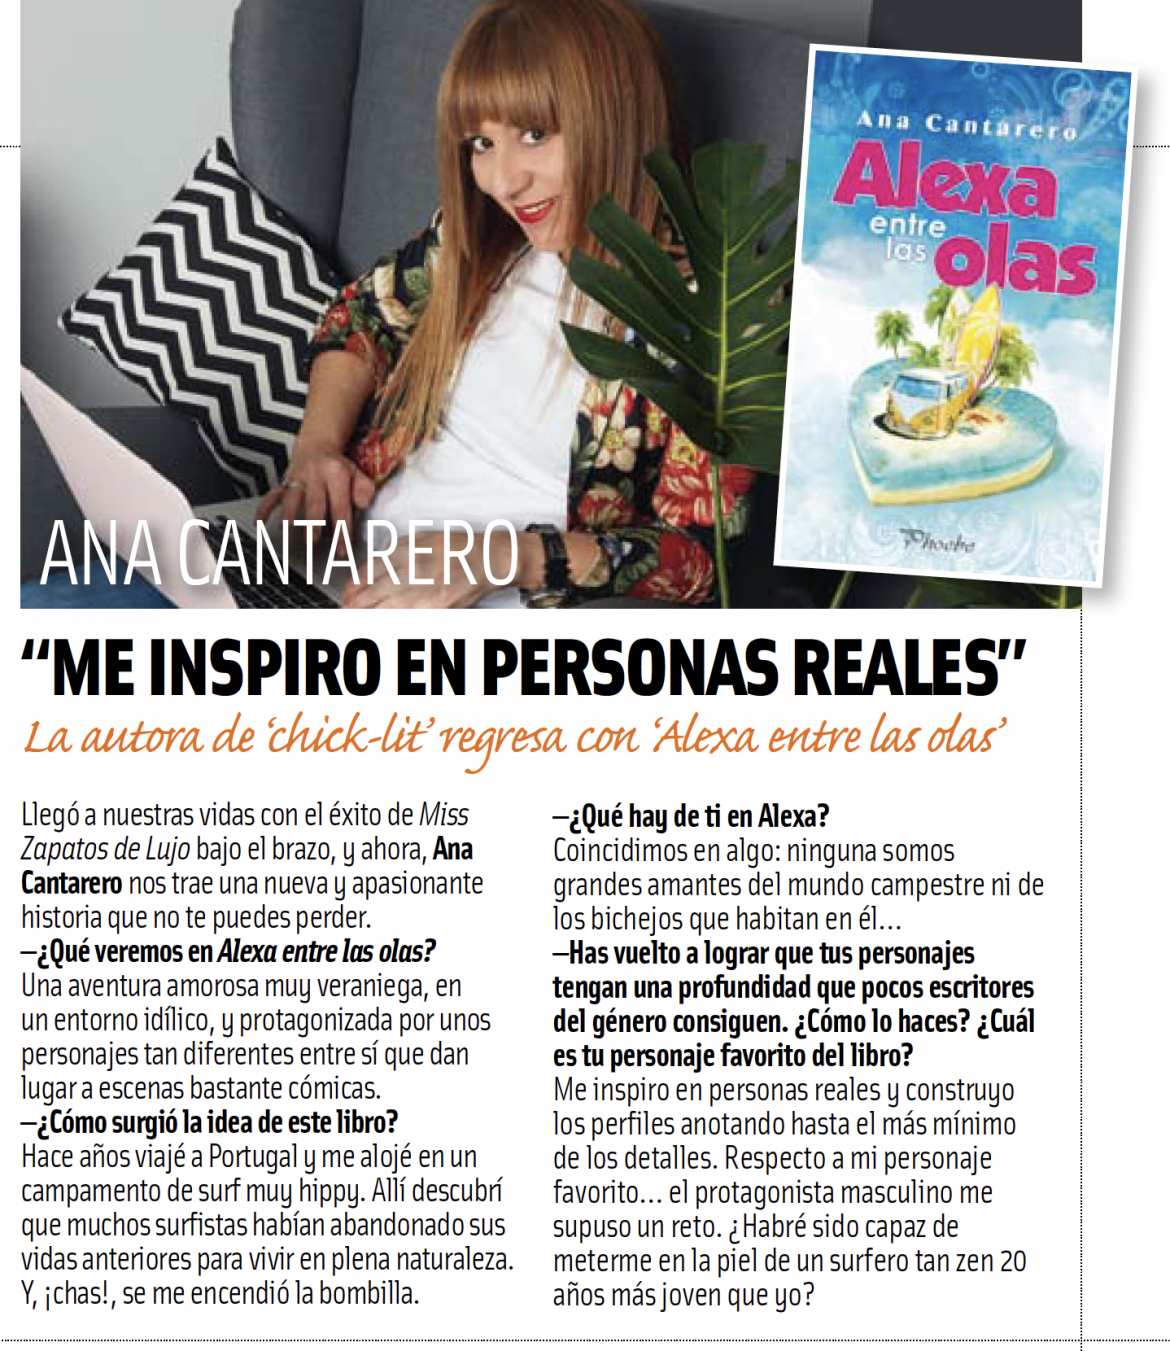 Entrevista a Ana Cantarero en la revista Cuore.